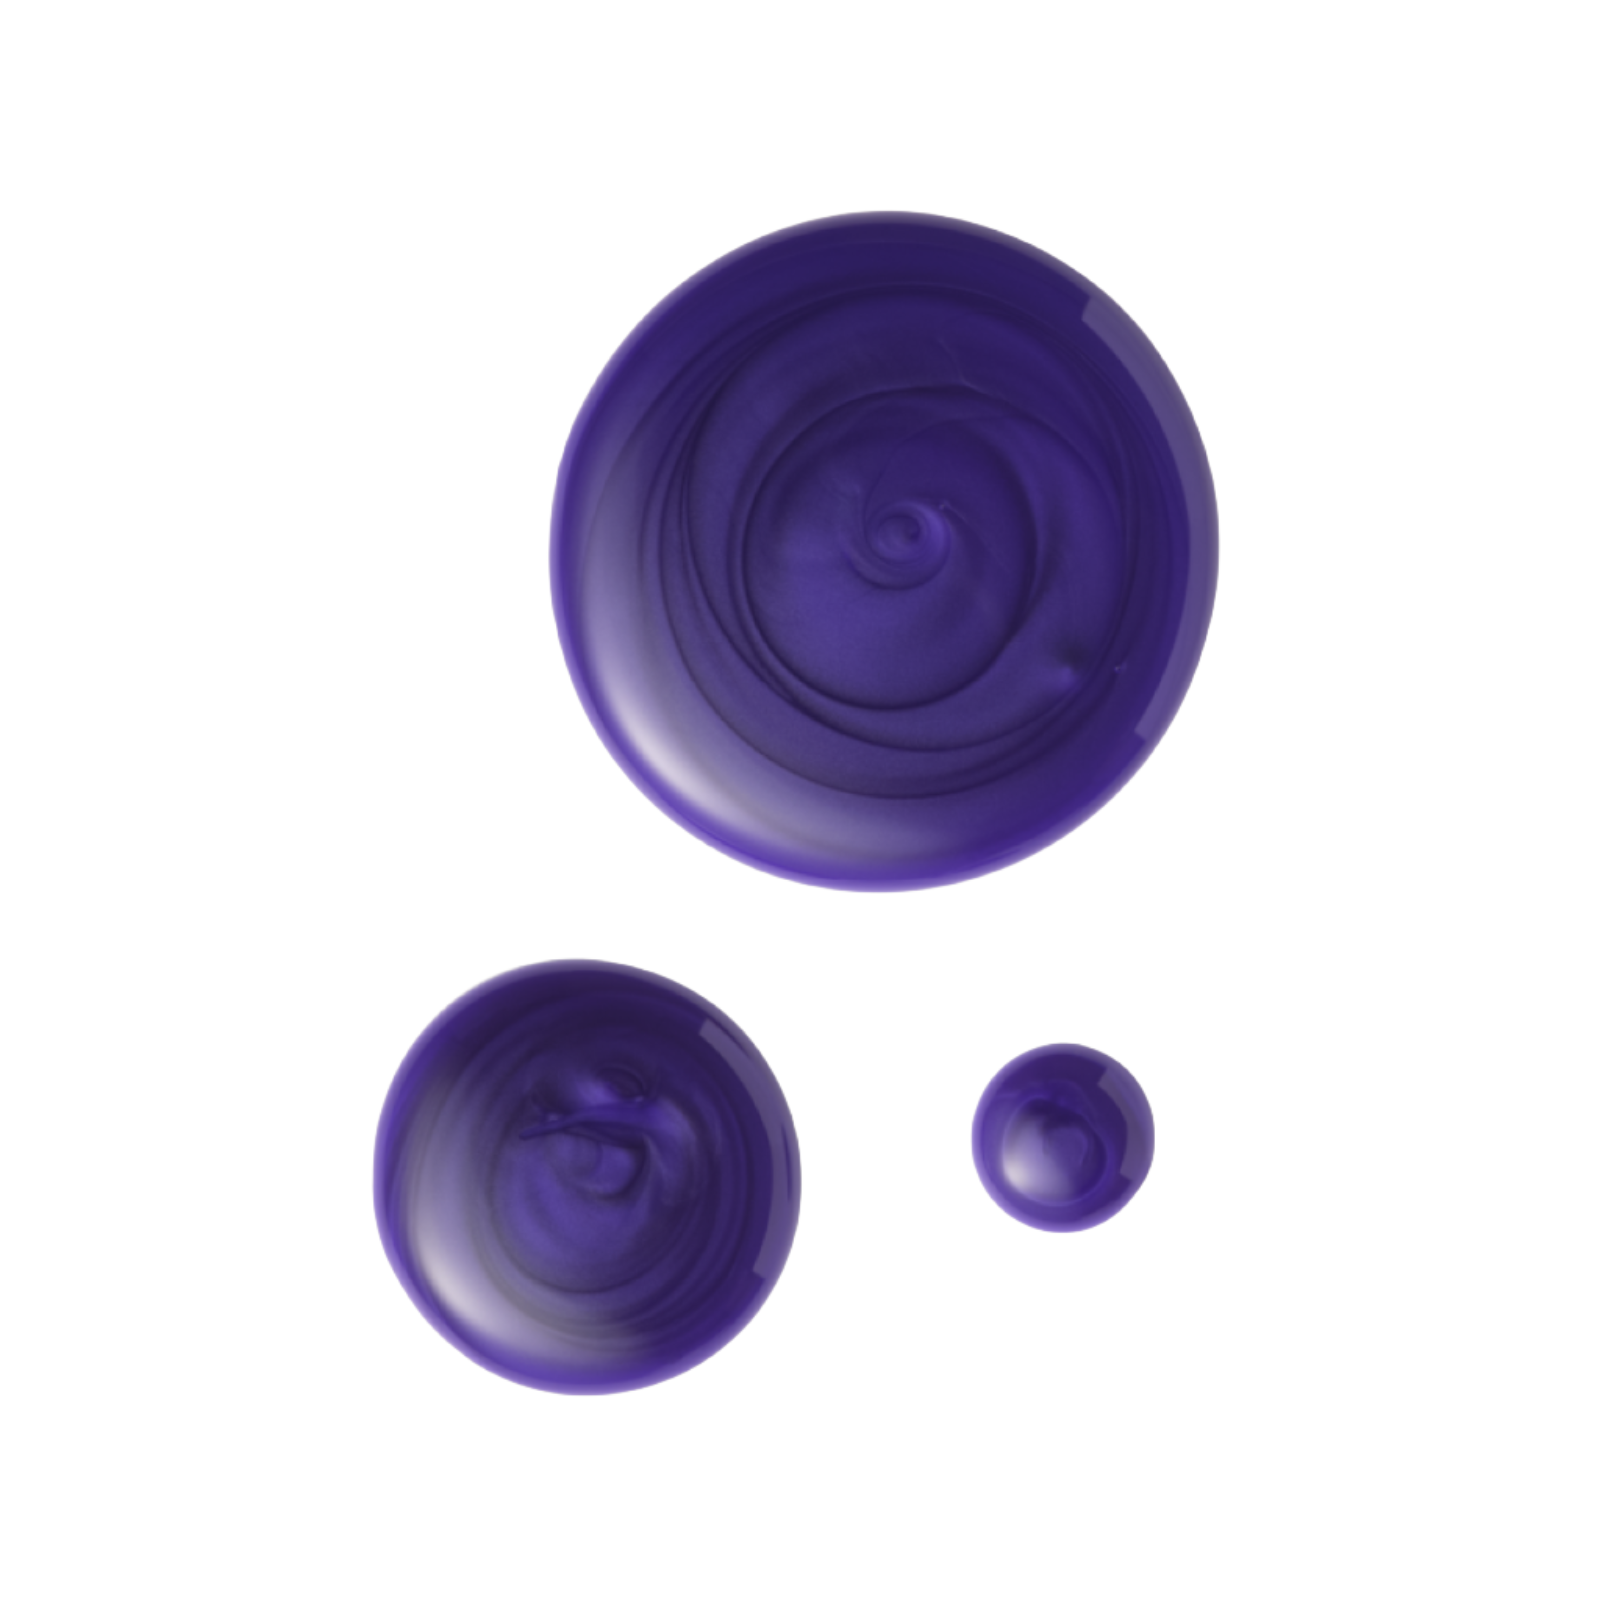 Colorlast Purple Shampoo